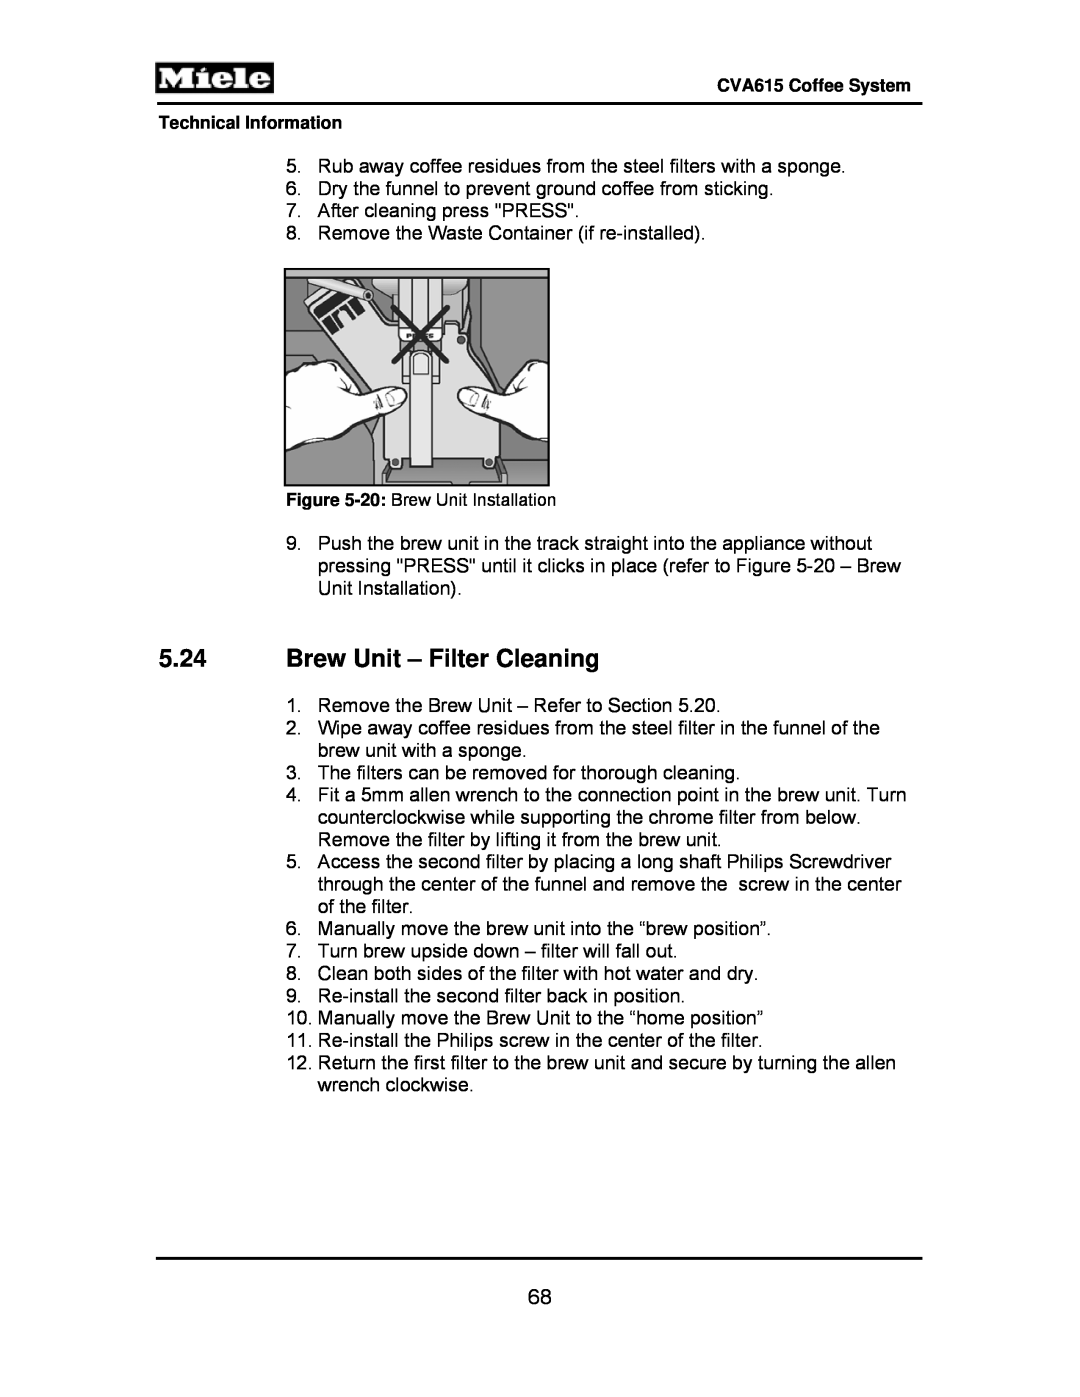 Miele CVA615 manual 5.24Brew Unit – Filter Cleaning 